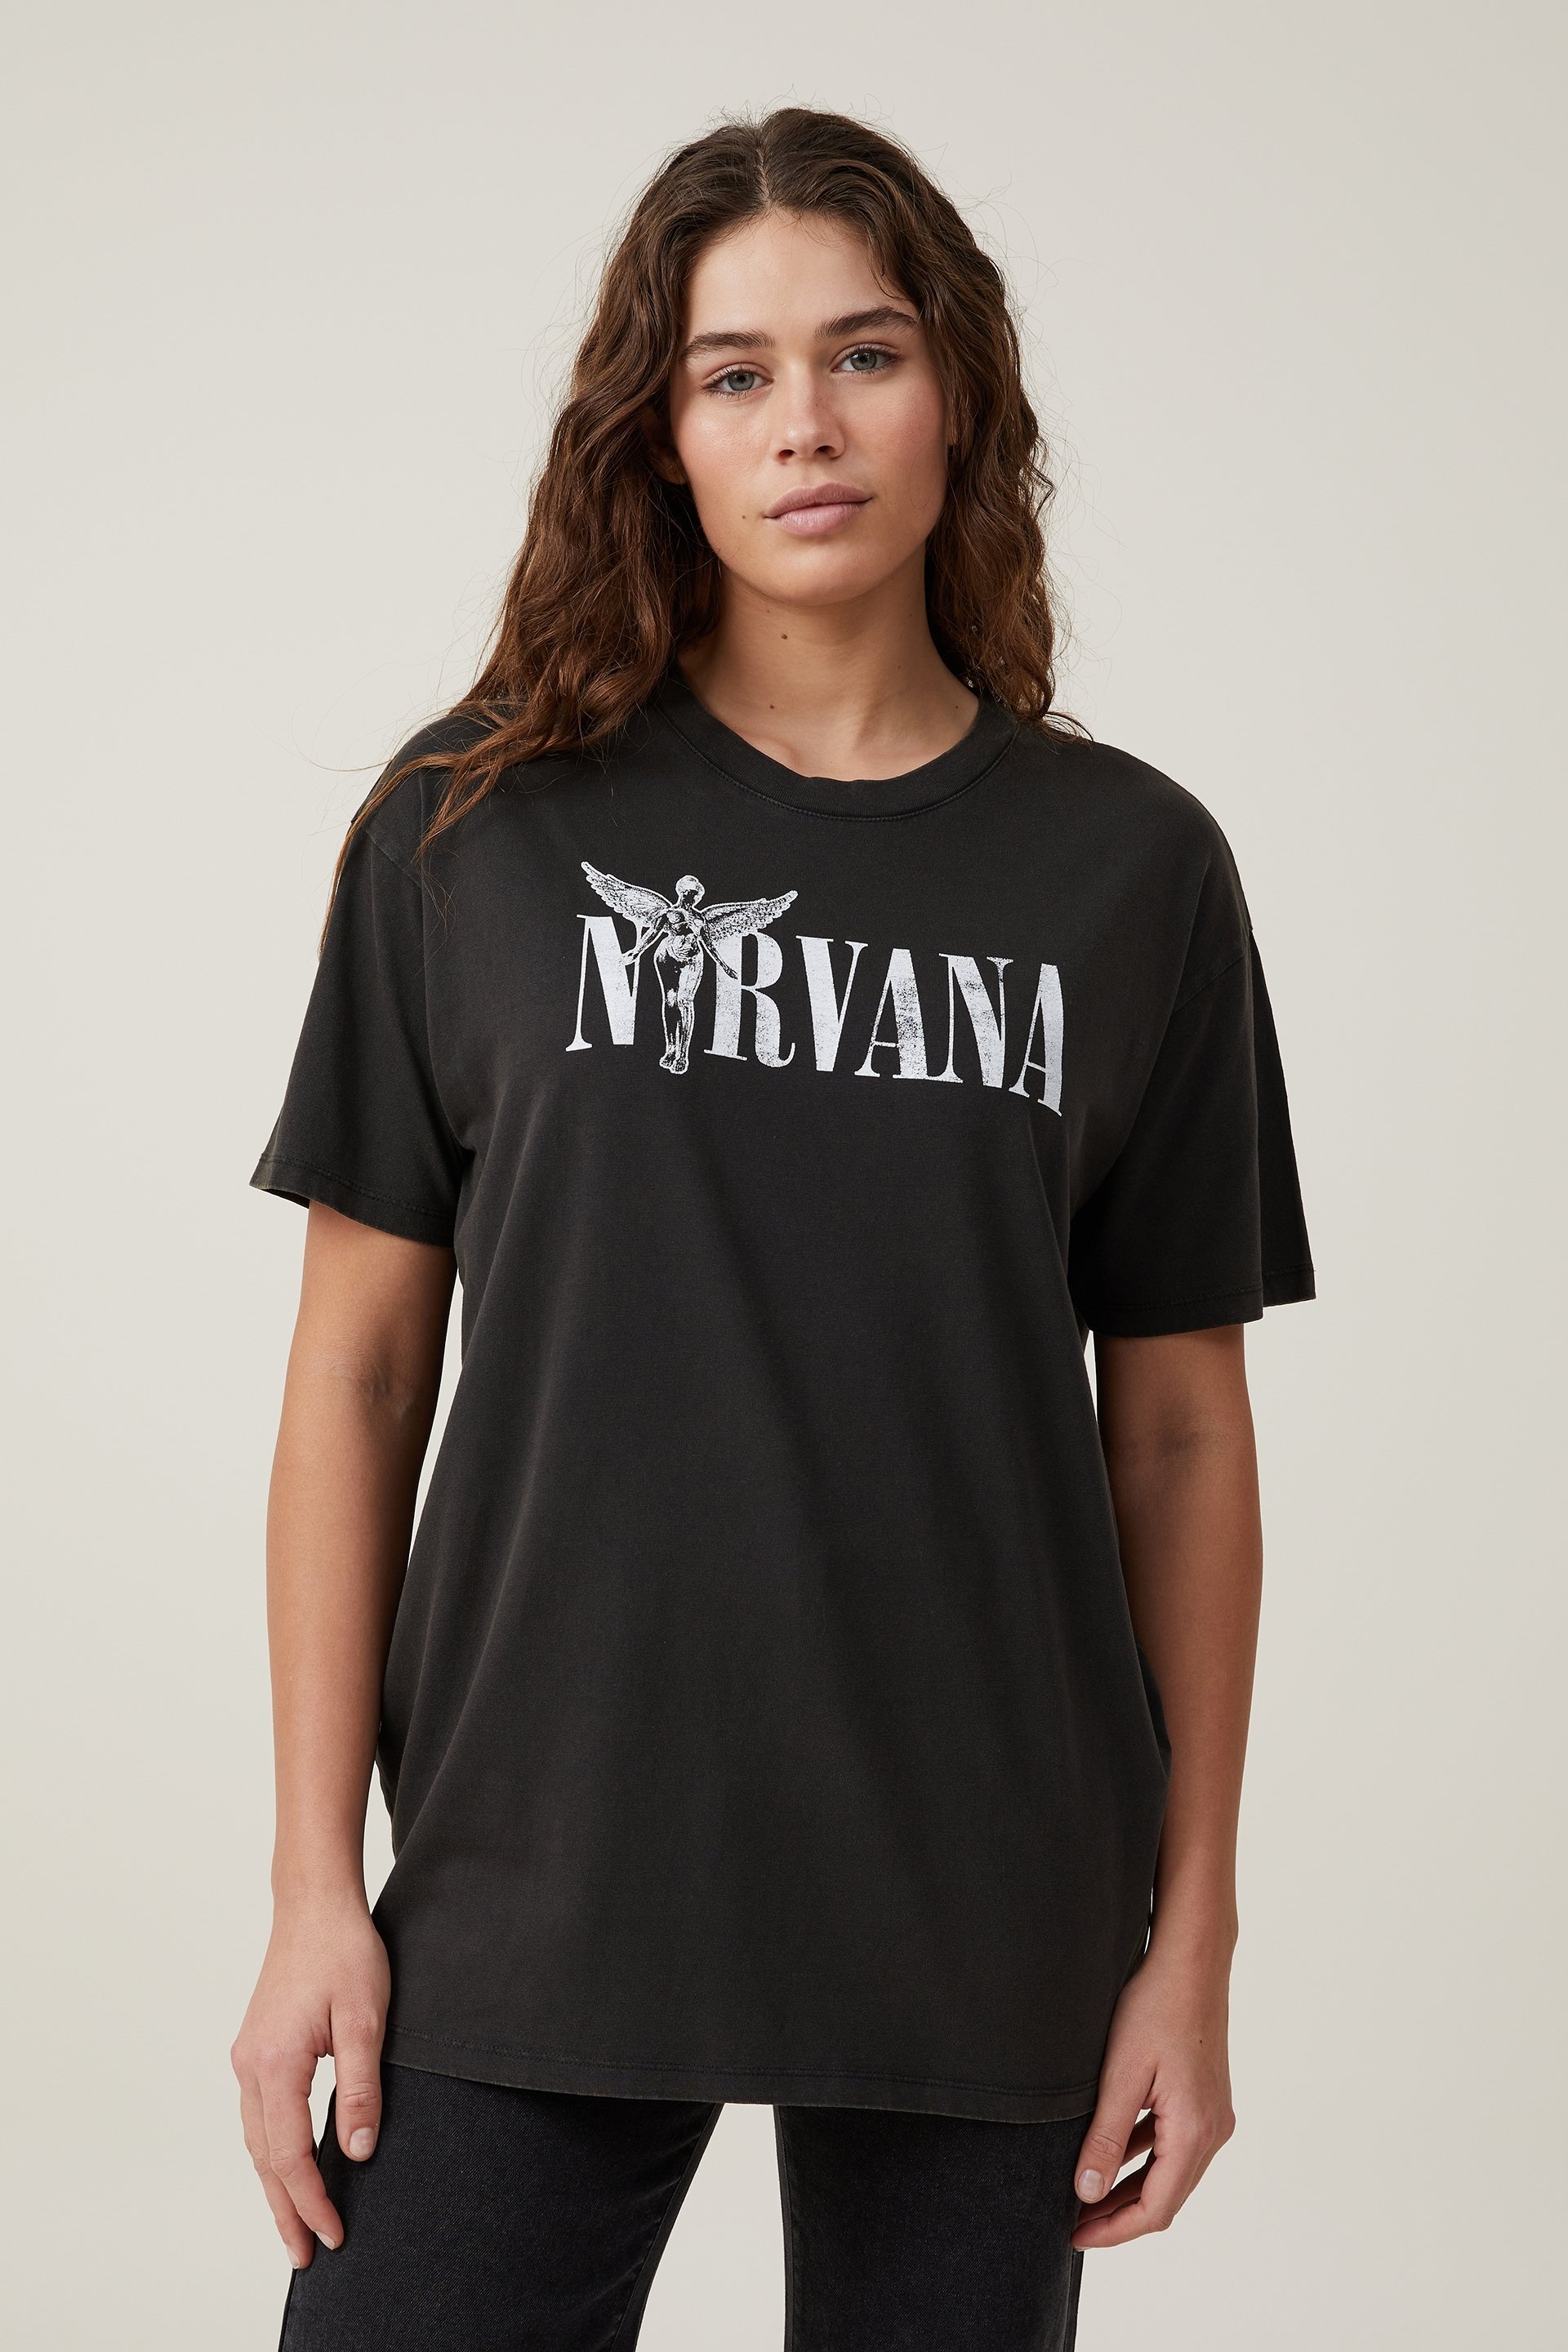 The Oversized Nirvana Tee